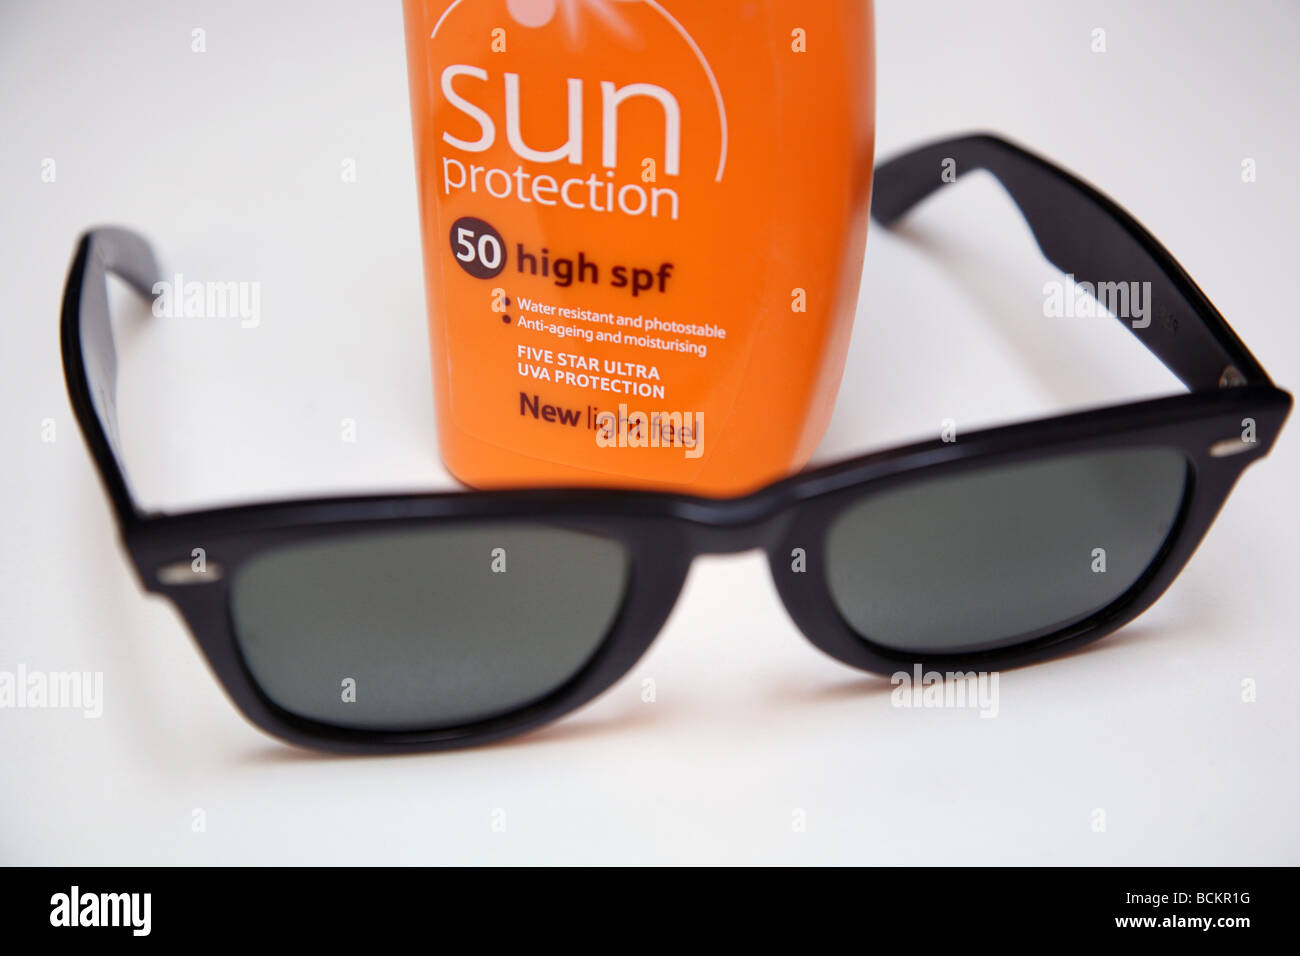 Hot weather precautions - sunblock, water, sunglasses Stock Photo